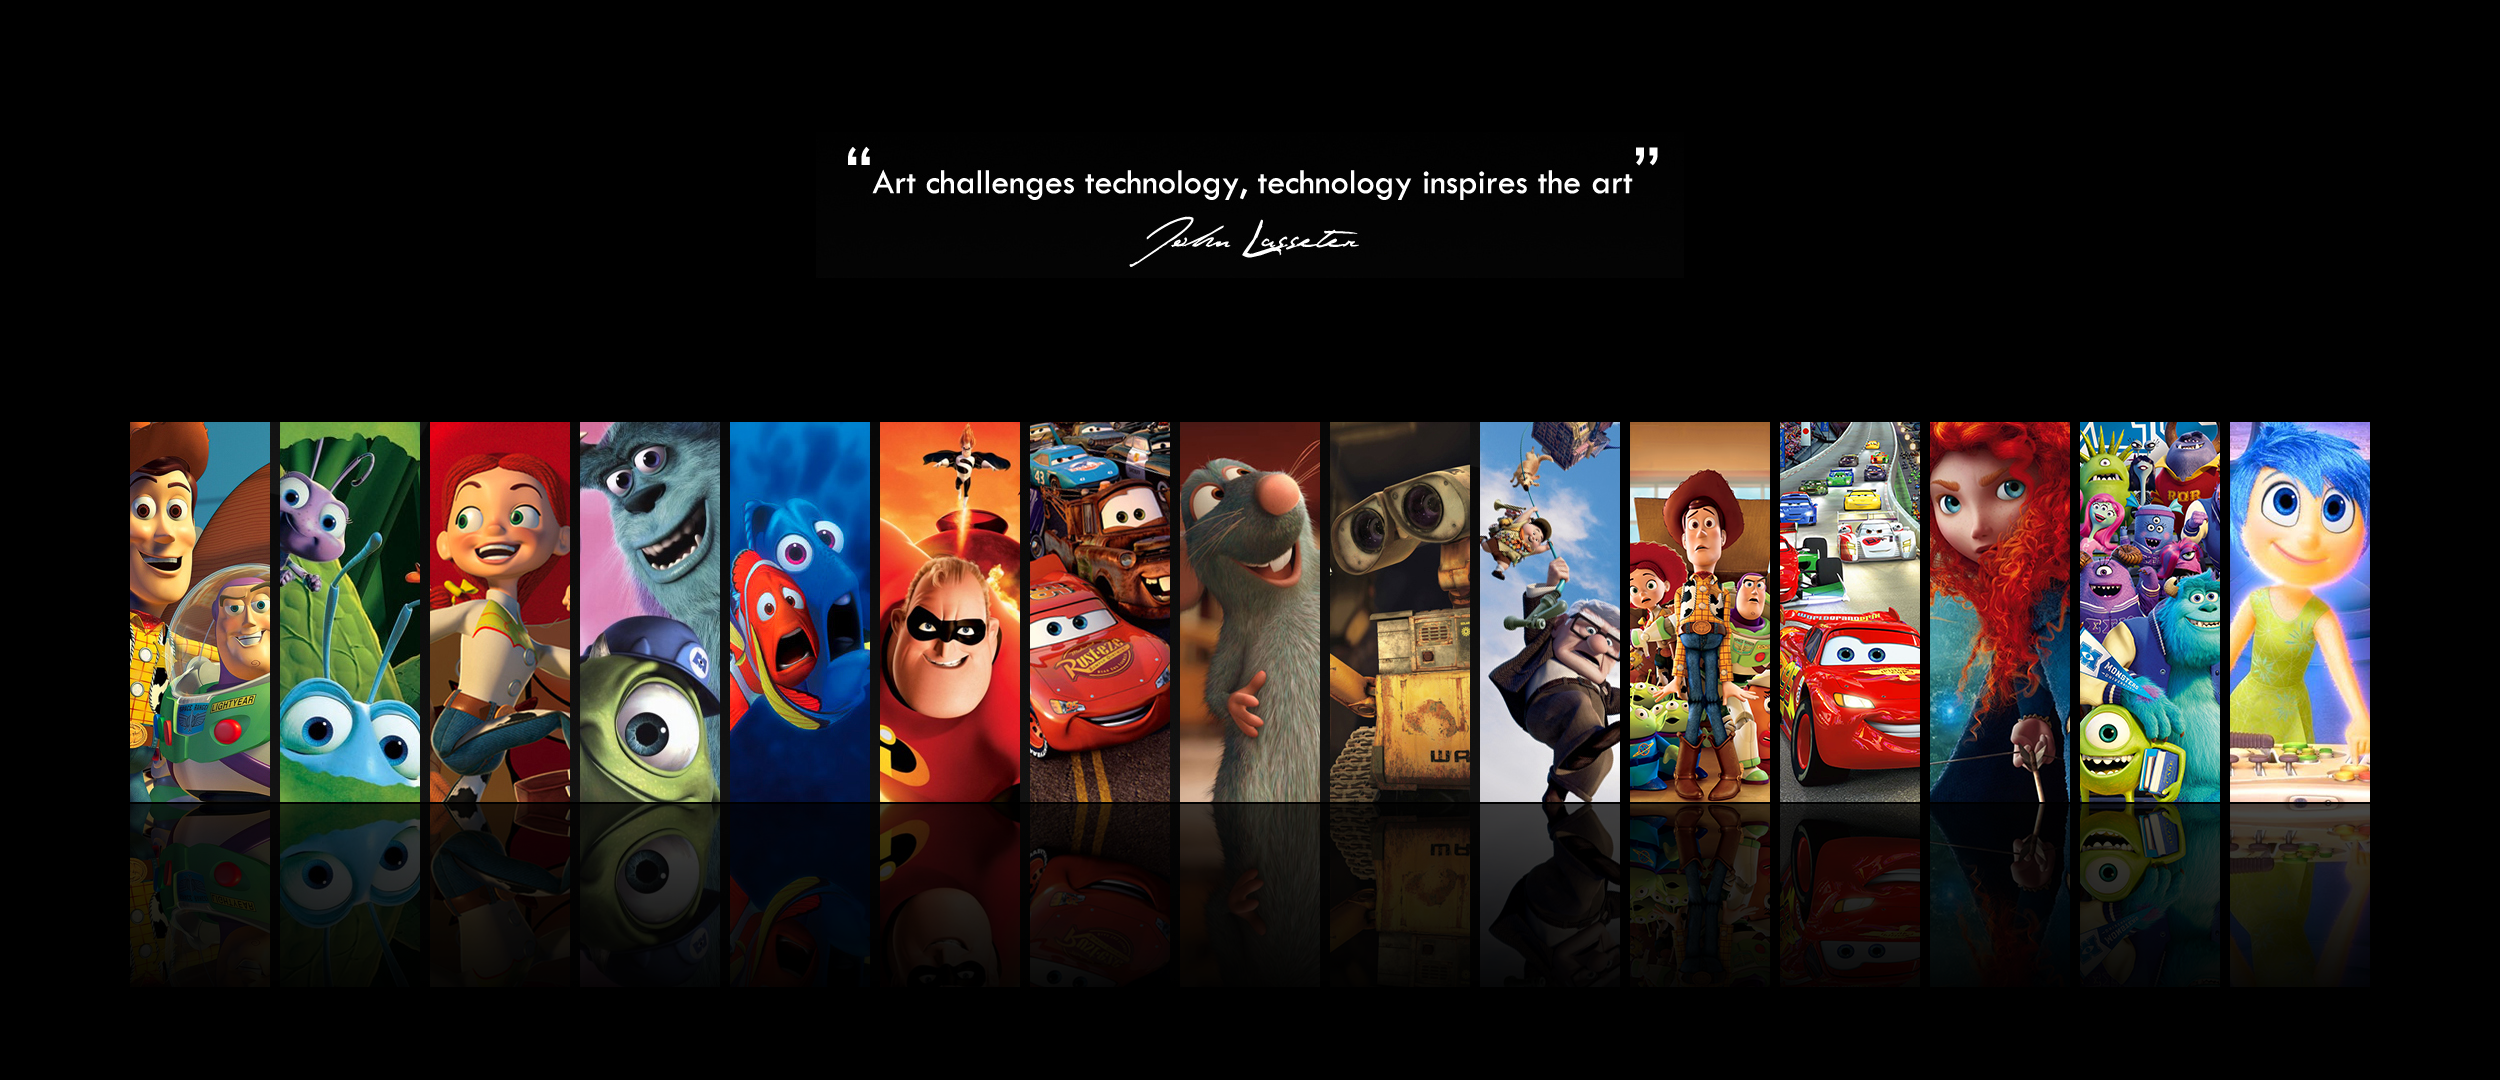 Download Pixar Movies Wallpaper Gallery